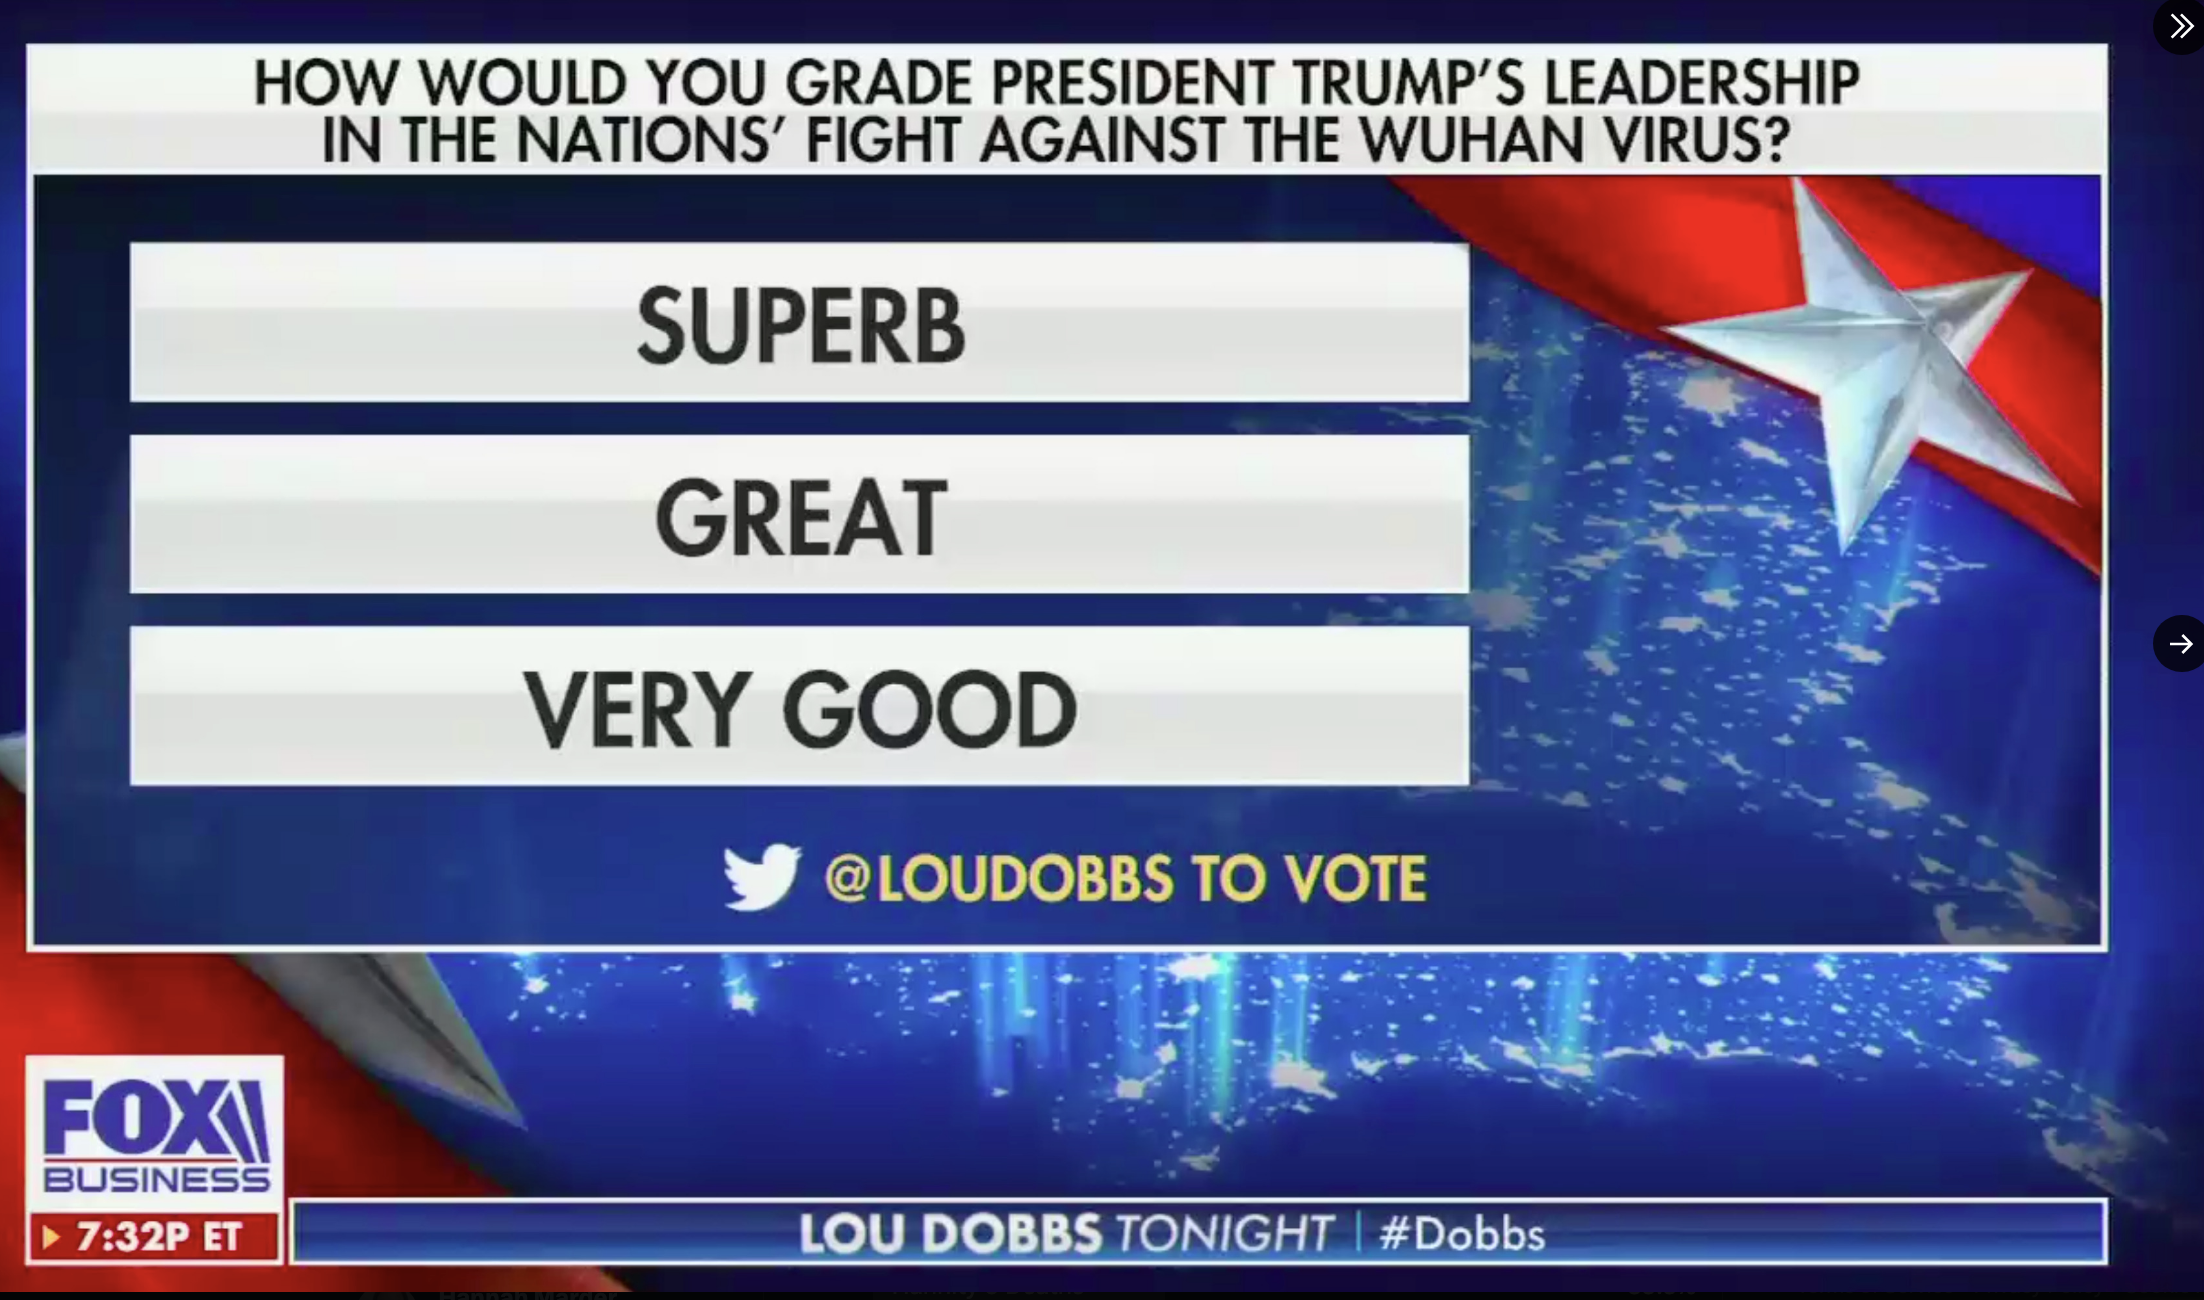 A poll for President Trump&#x27;s leadership